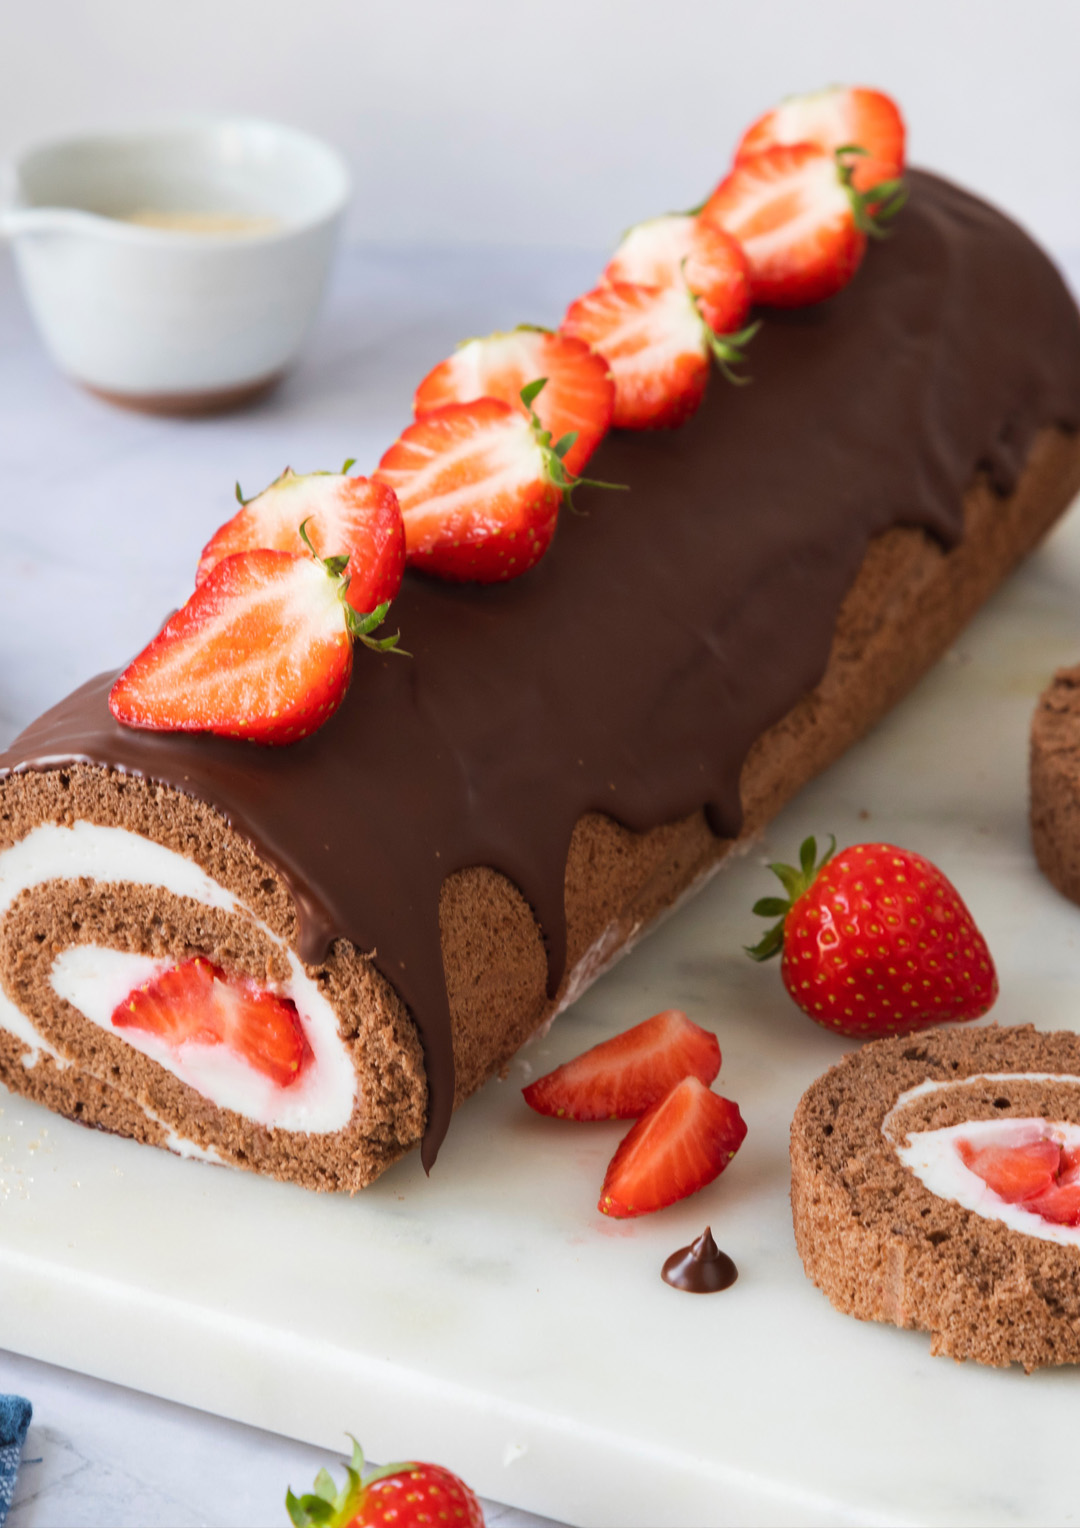 Chocolate-sponge-roll with strawberries